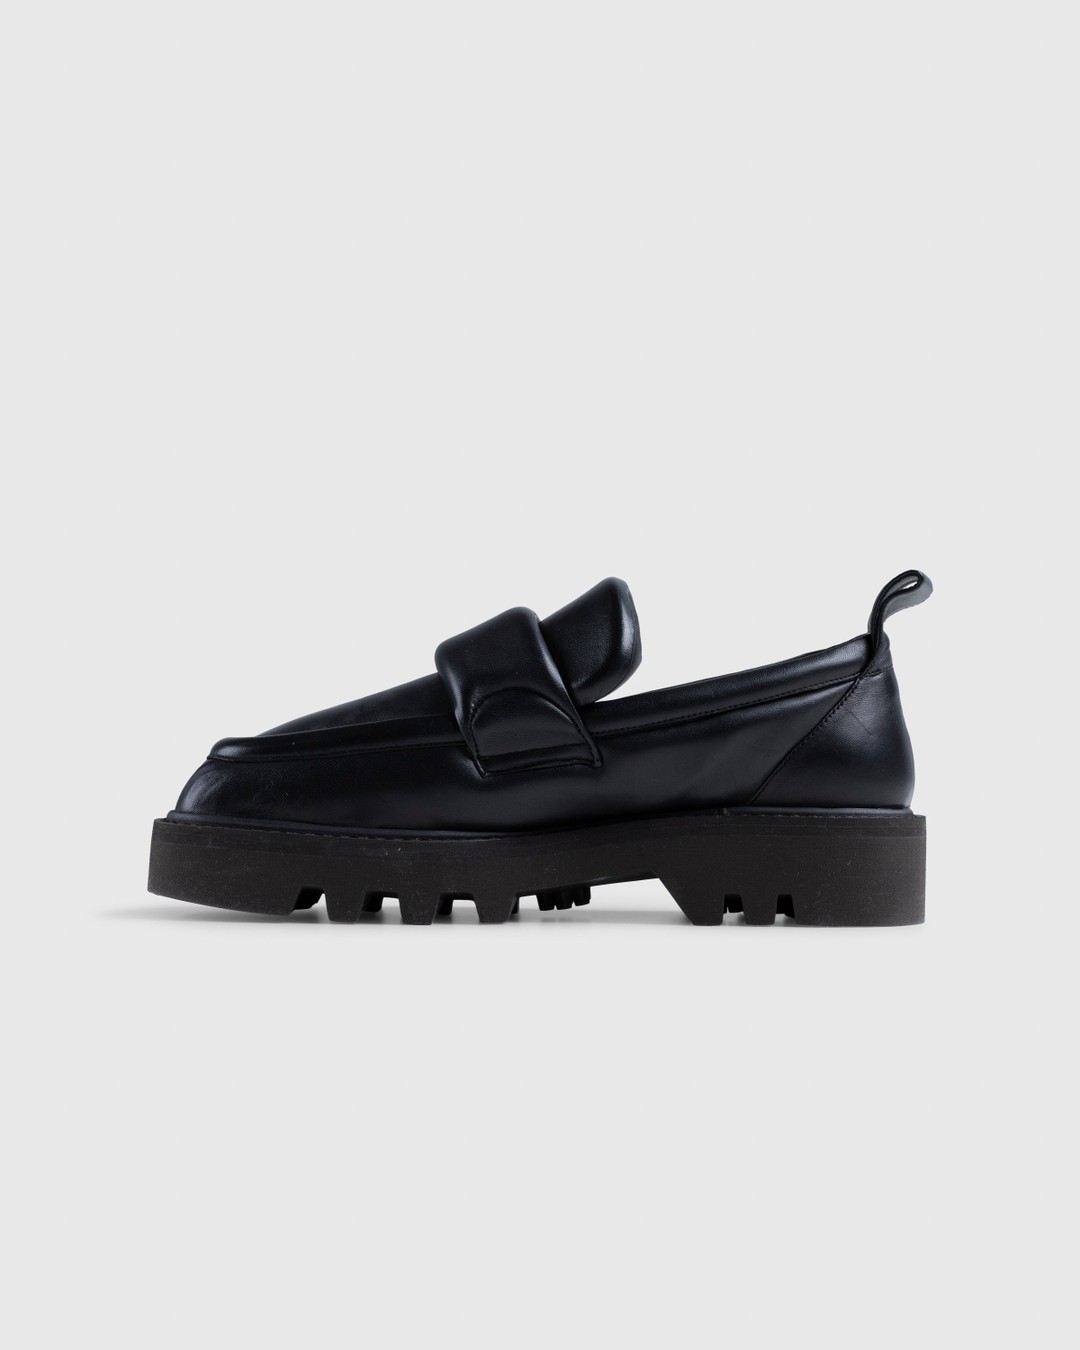 Dries van Noten – Padded Leather Loafers Black - Sandals & Slides - Black - Image 2